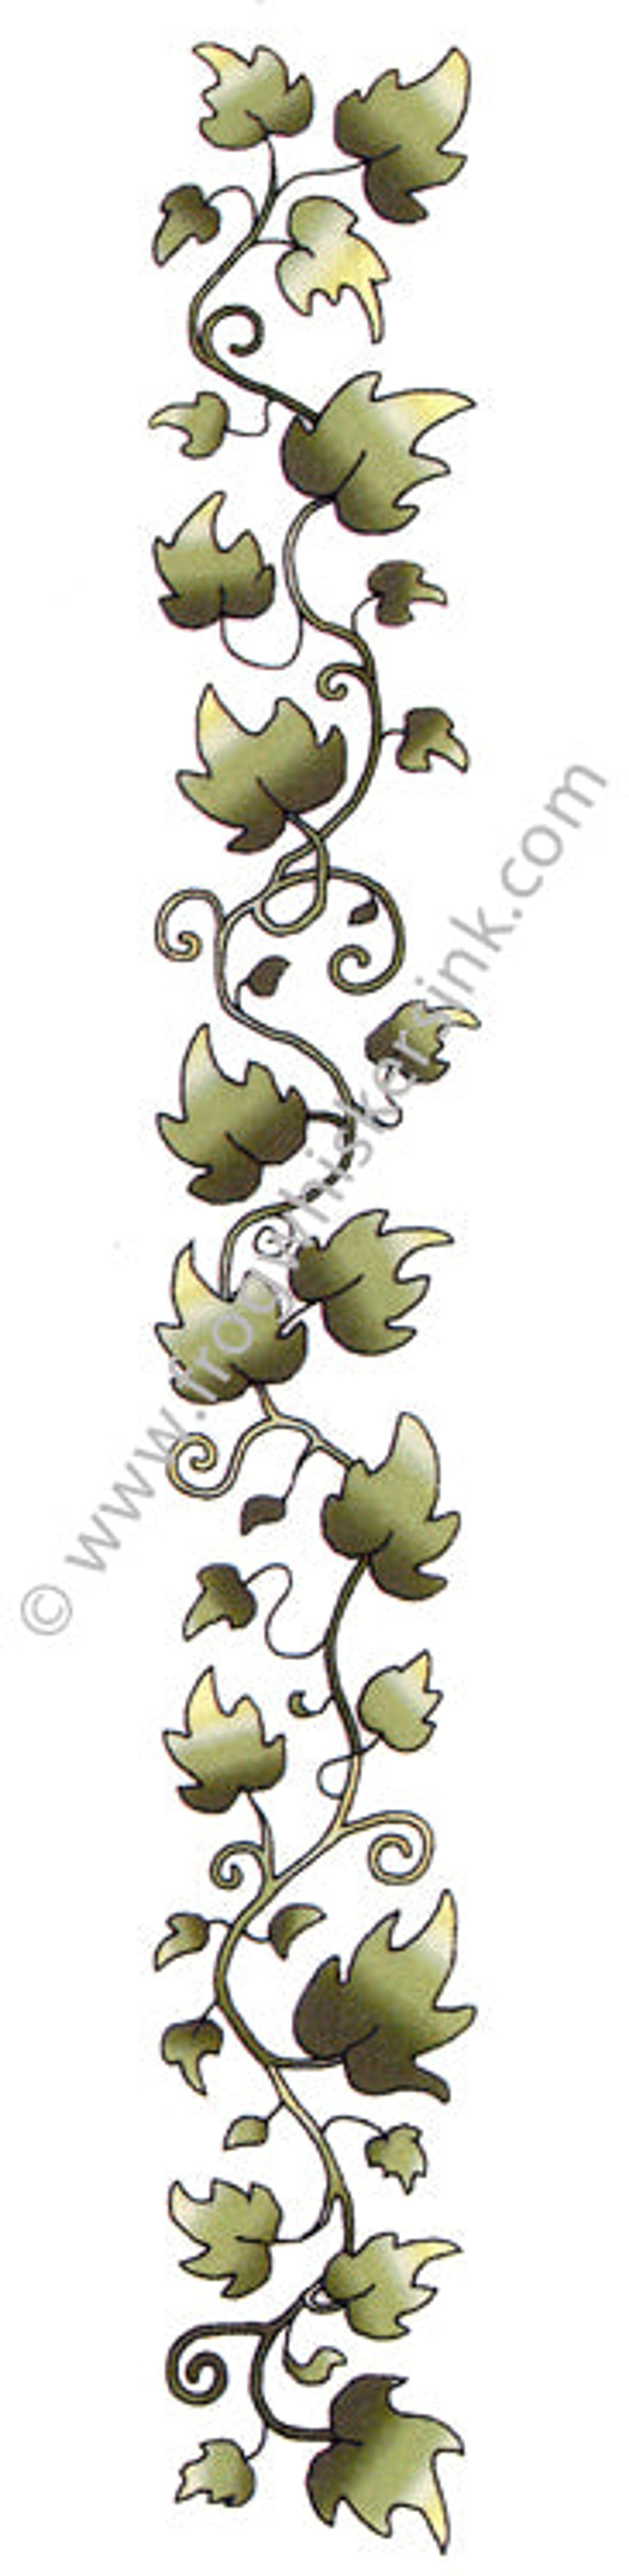 Frog's Whiskers Ink Stamps - Ivy Border Cling Mount Stamp